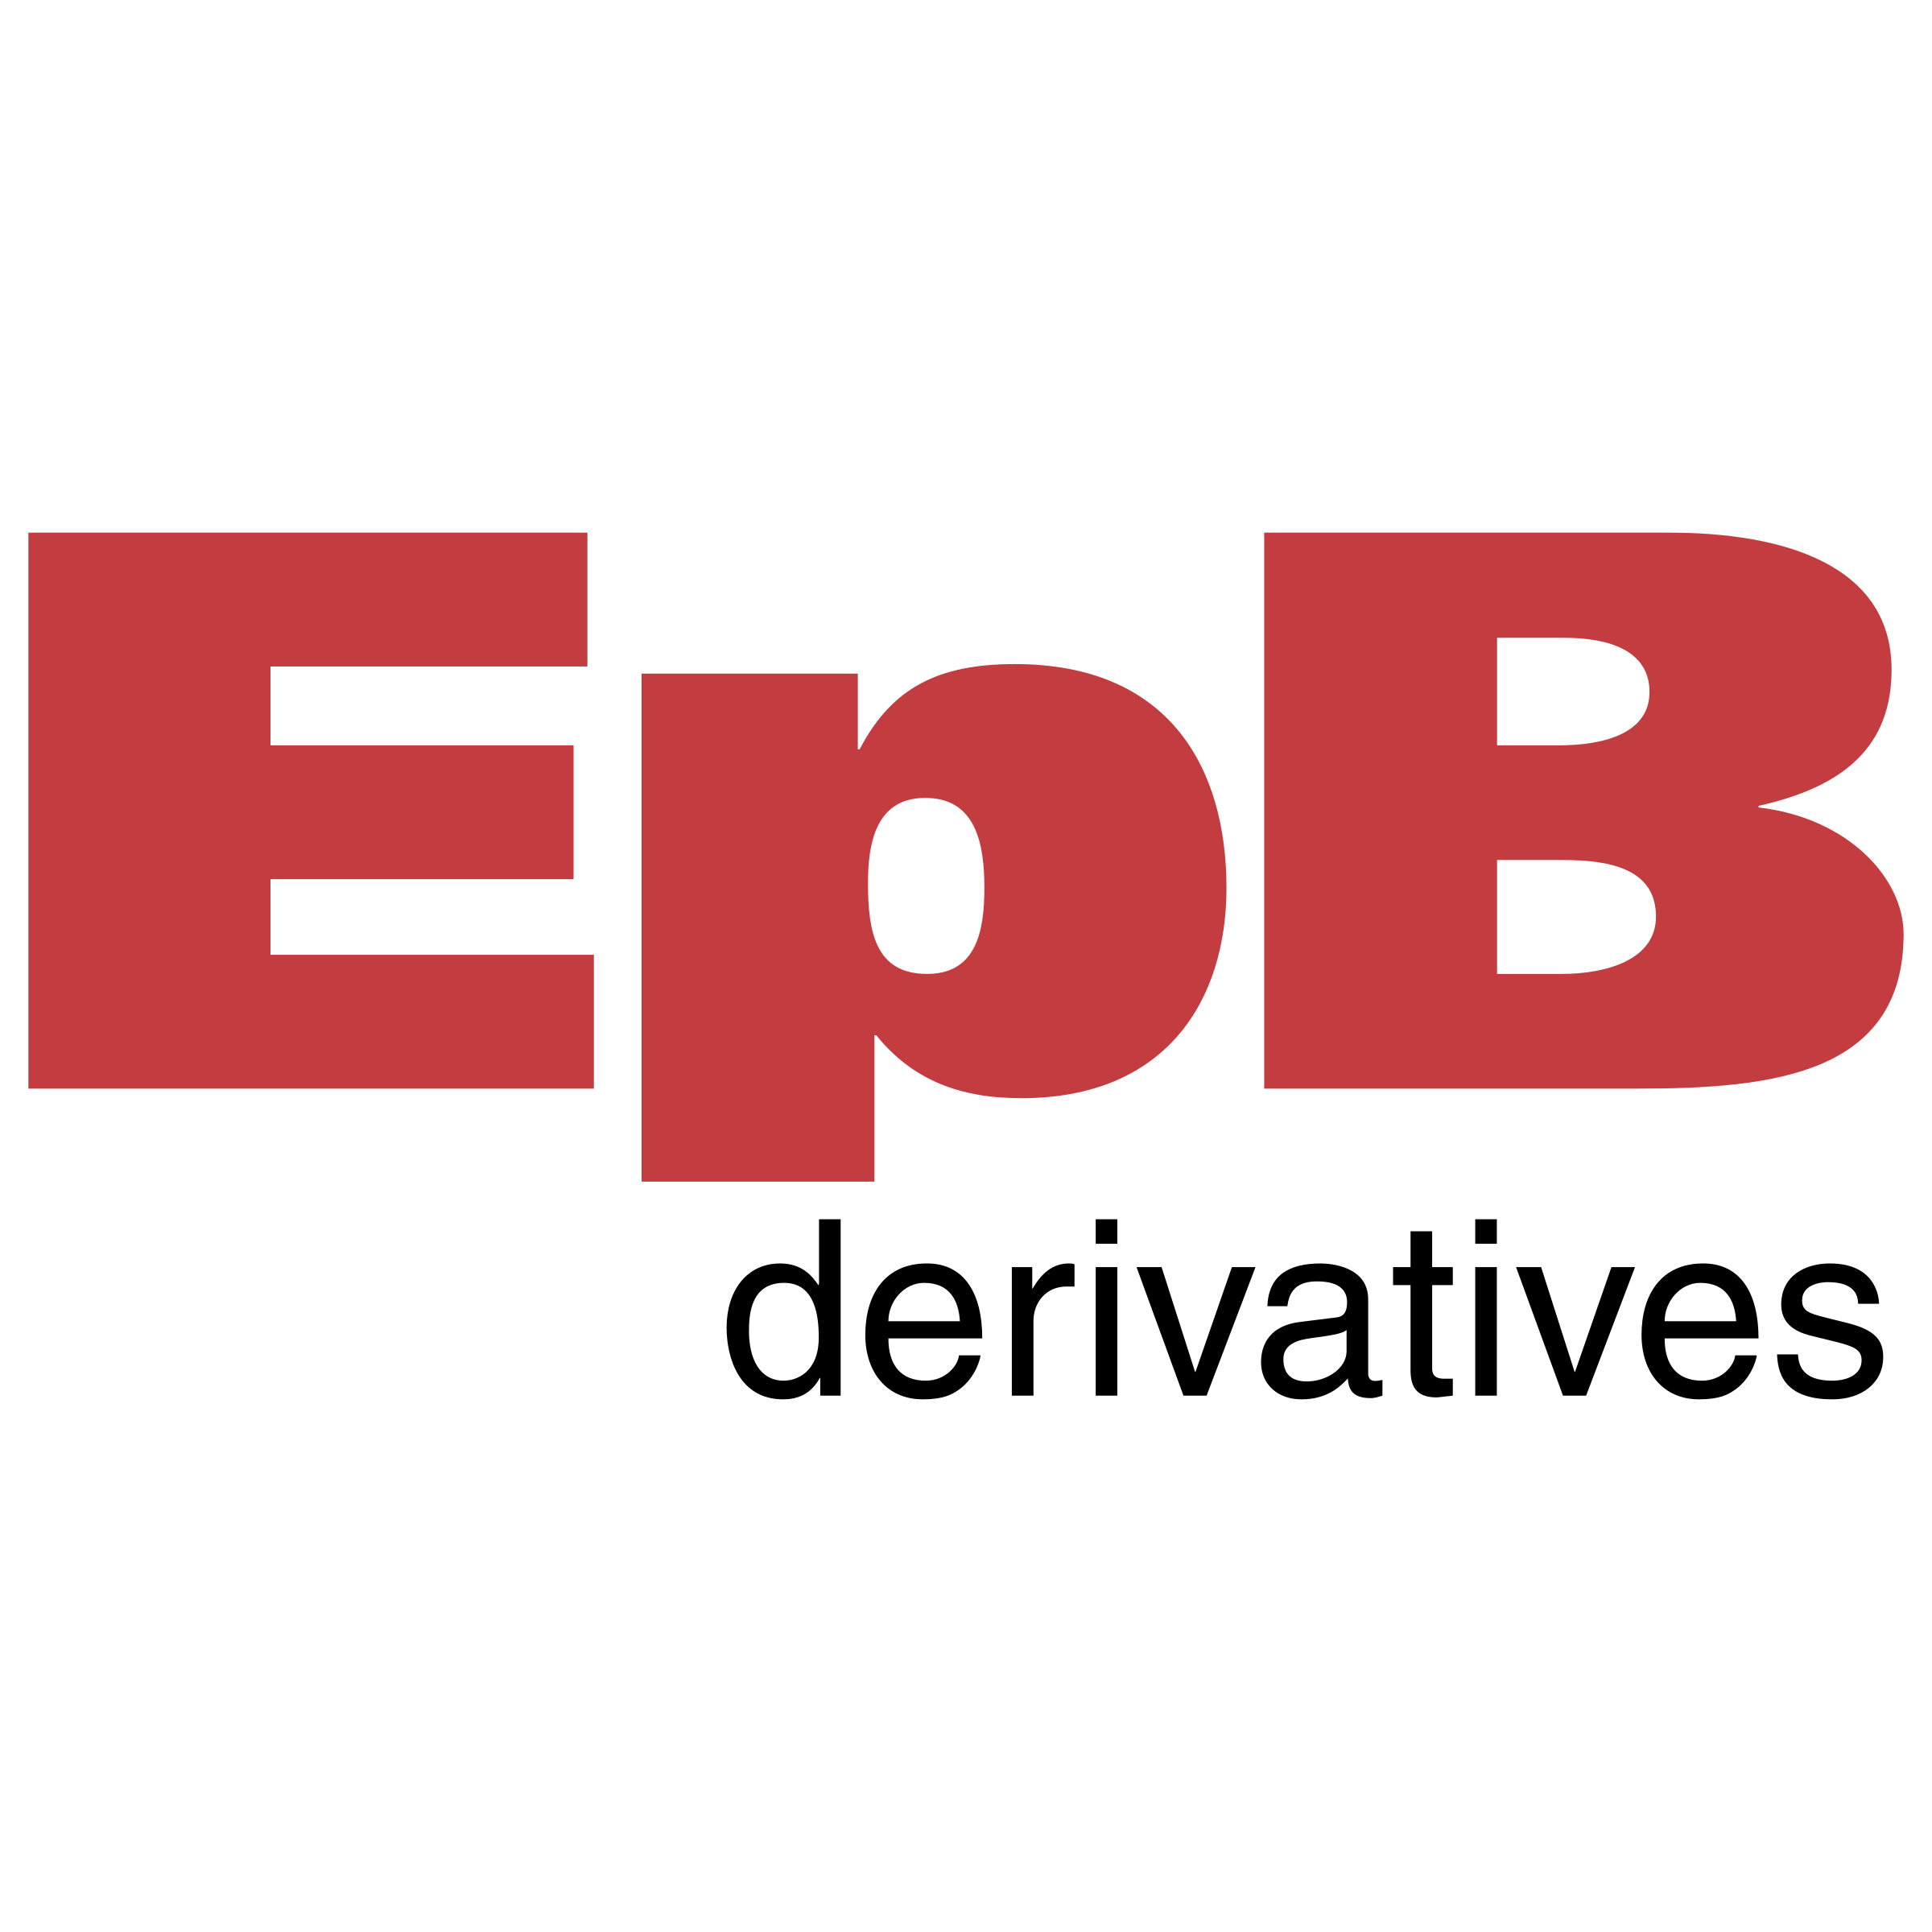 EPB Logo - EpB Logo PNG Transparent & SVG Vector - Freebie Supply